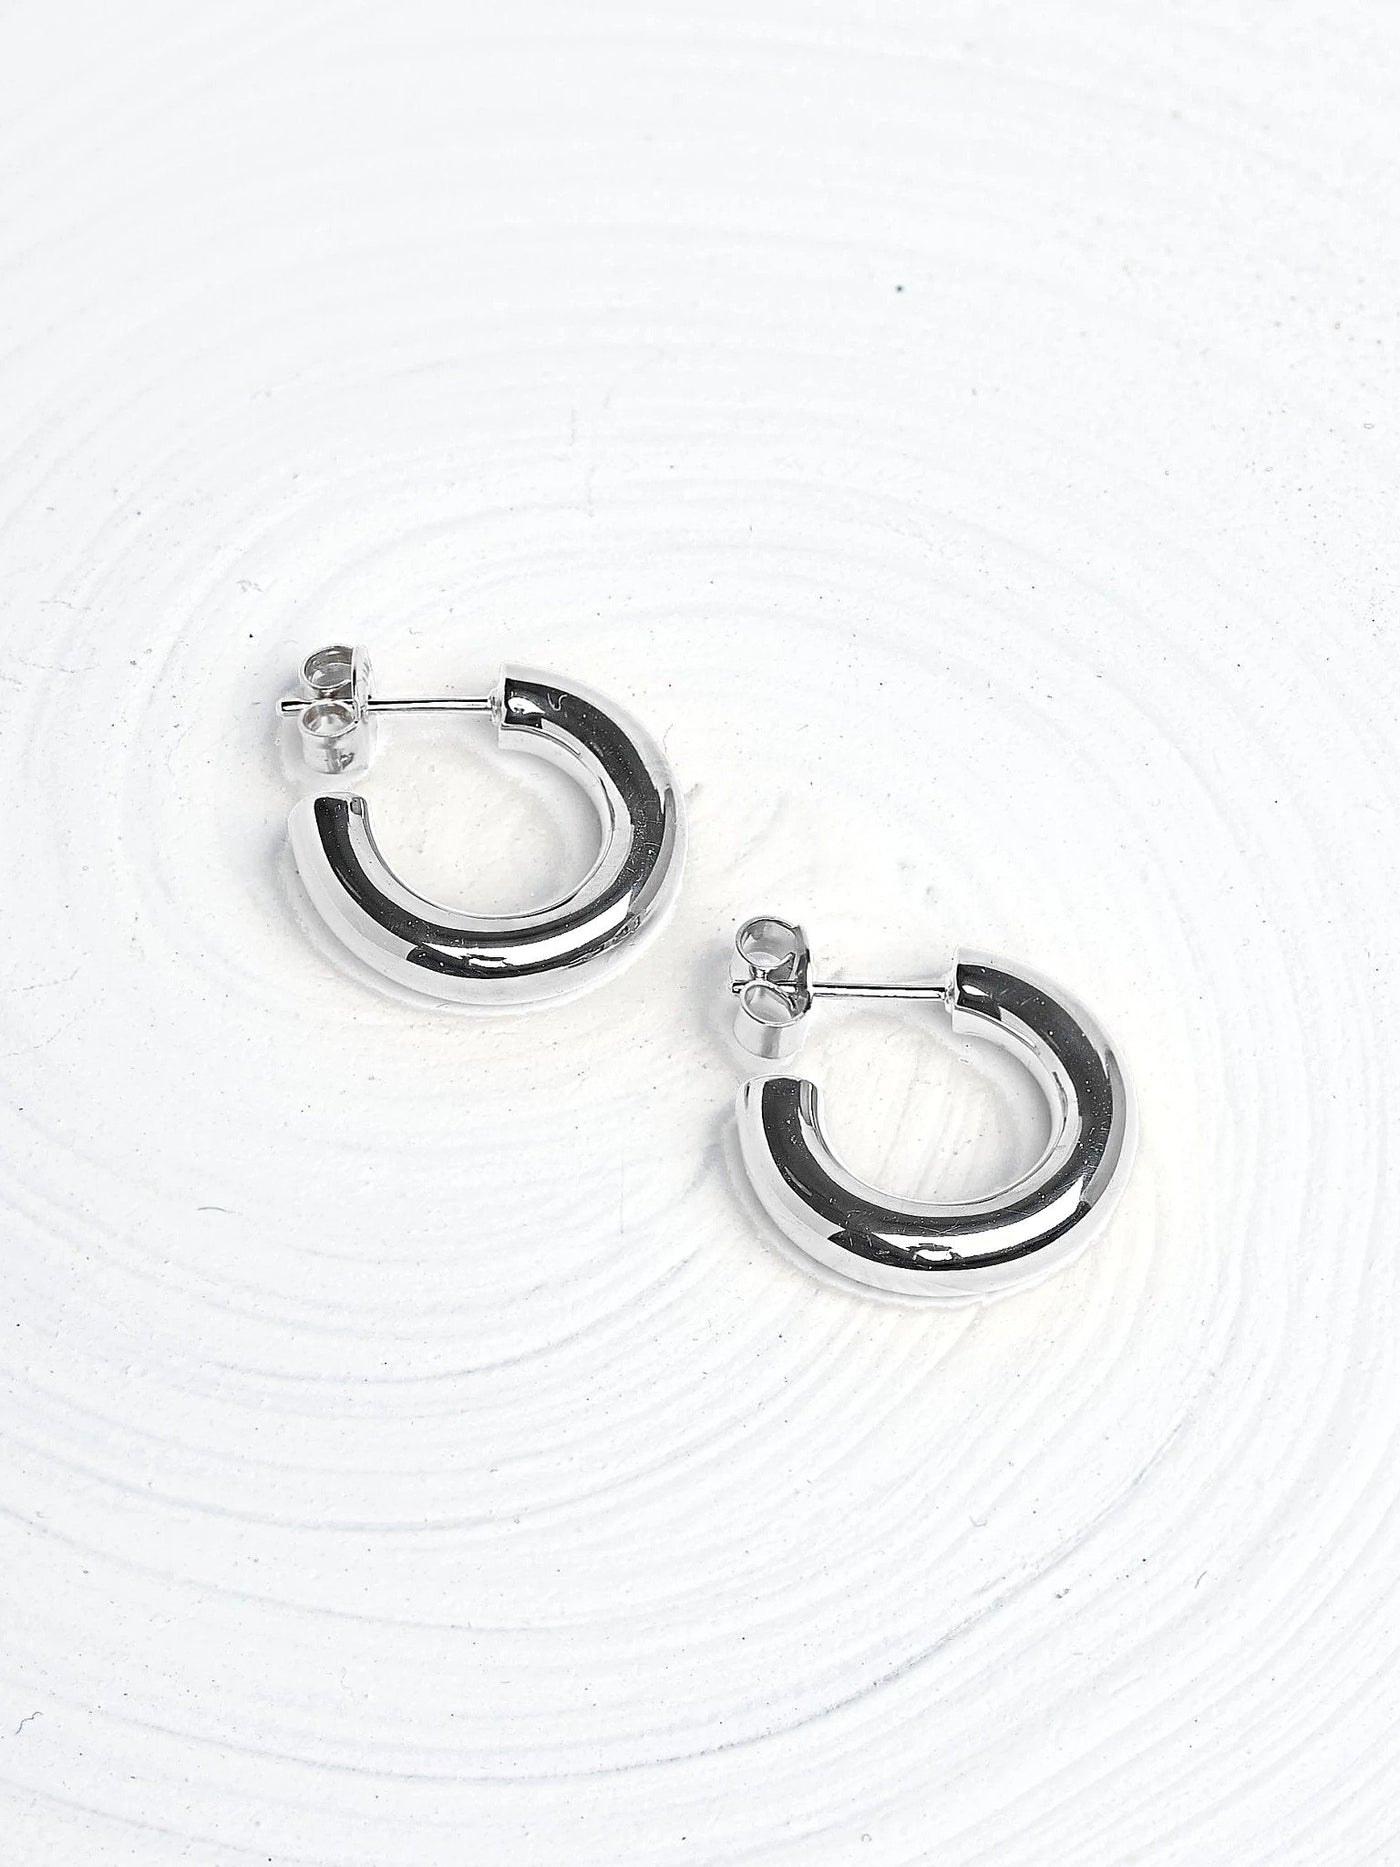 Vero Hoop Earrings - 925 Sterling SilverBackUpItemsBest Friend GiftLunai Jewelry